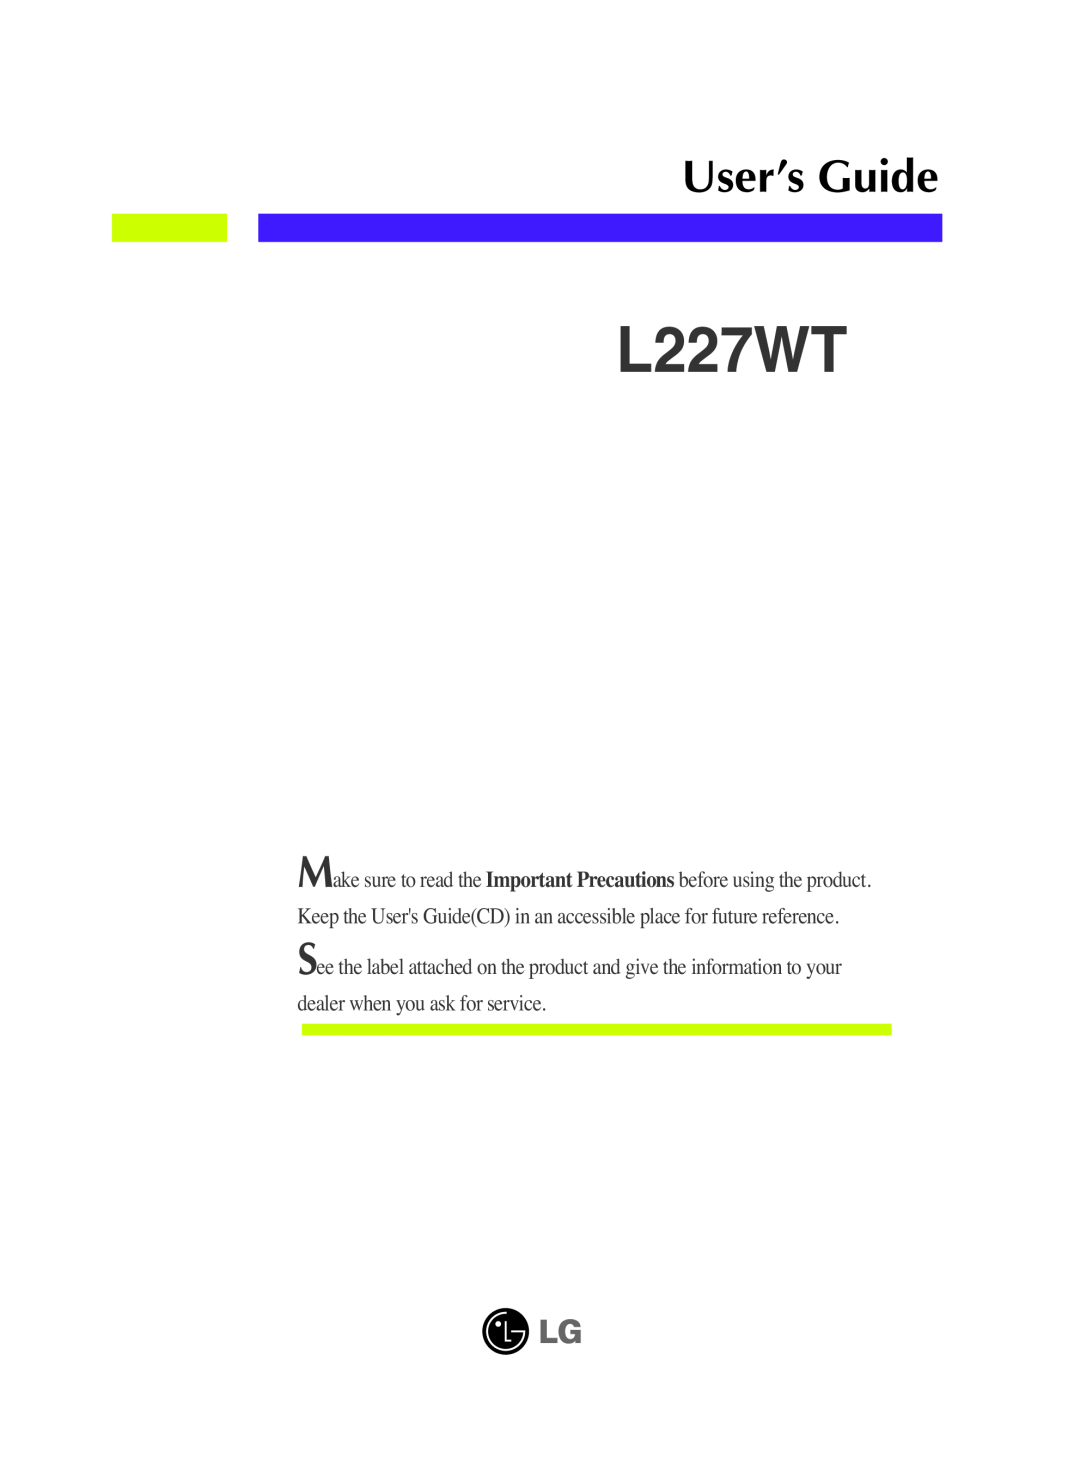 LG Electronics manual L227WT L227WTG L227WTP, User’s Guide 